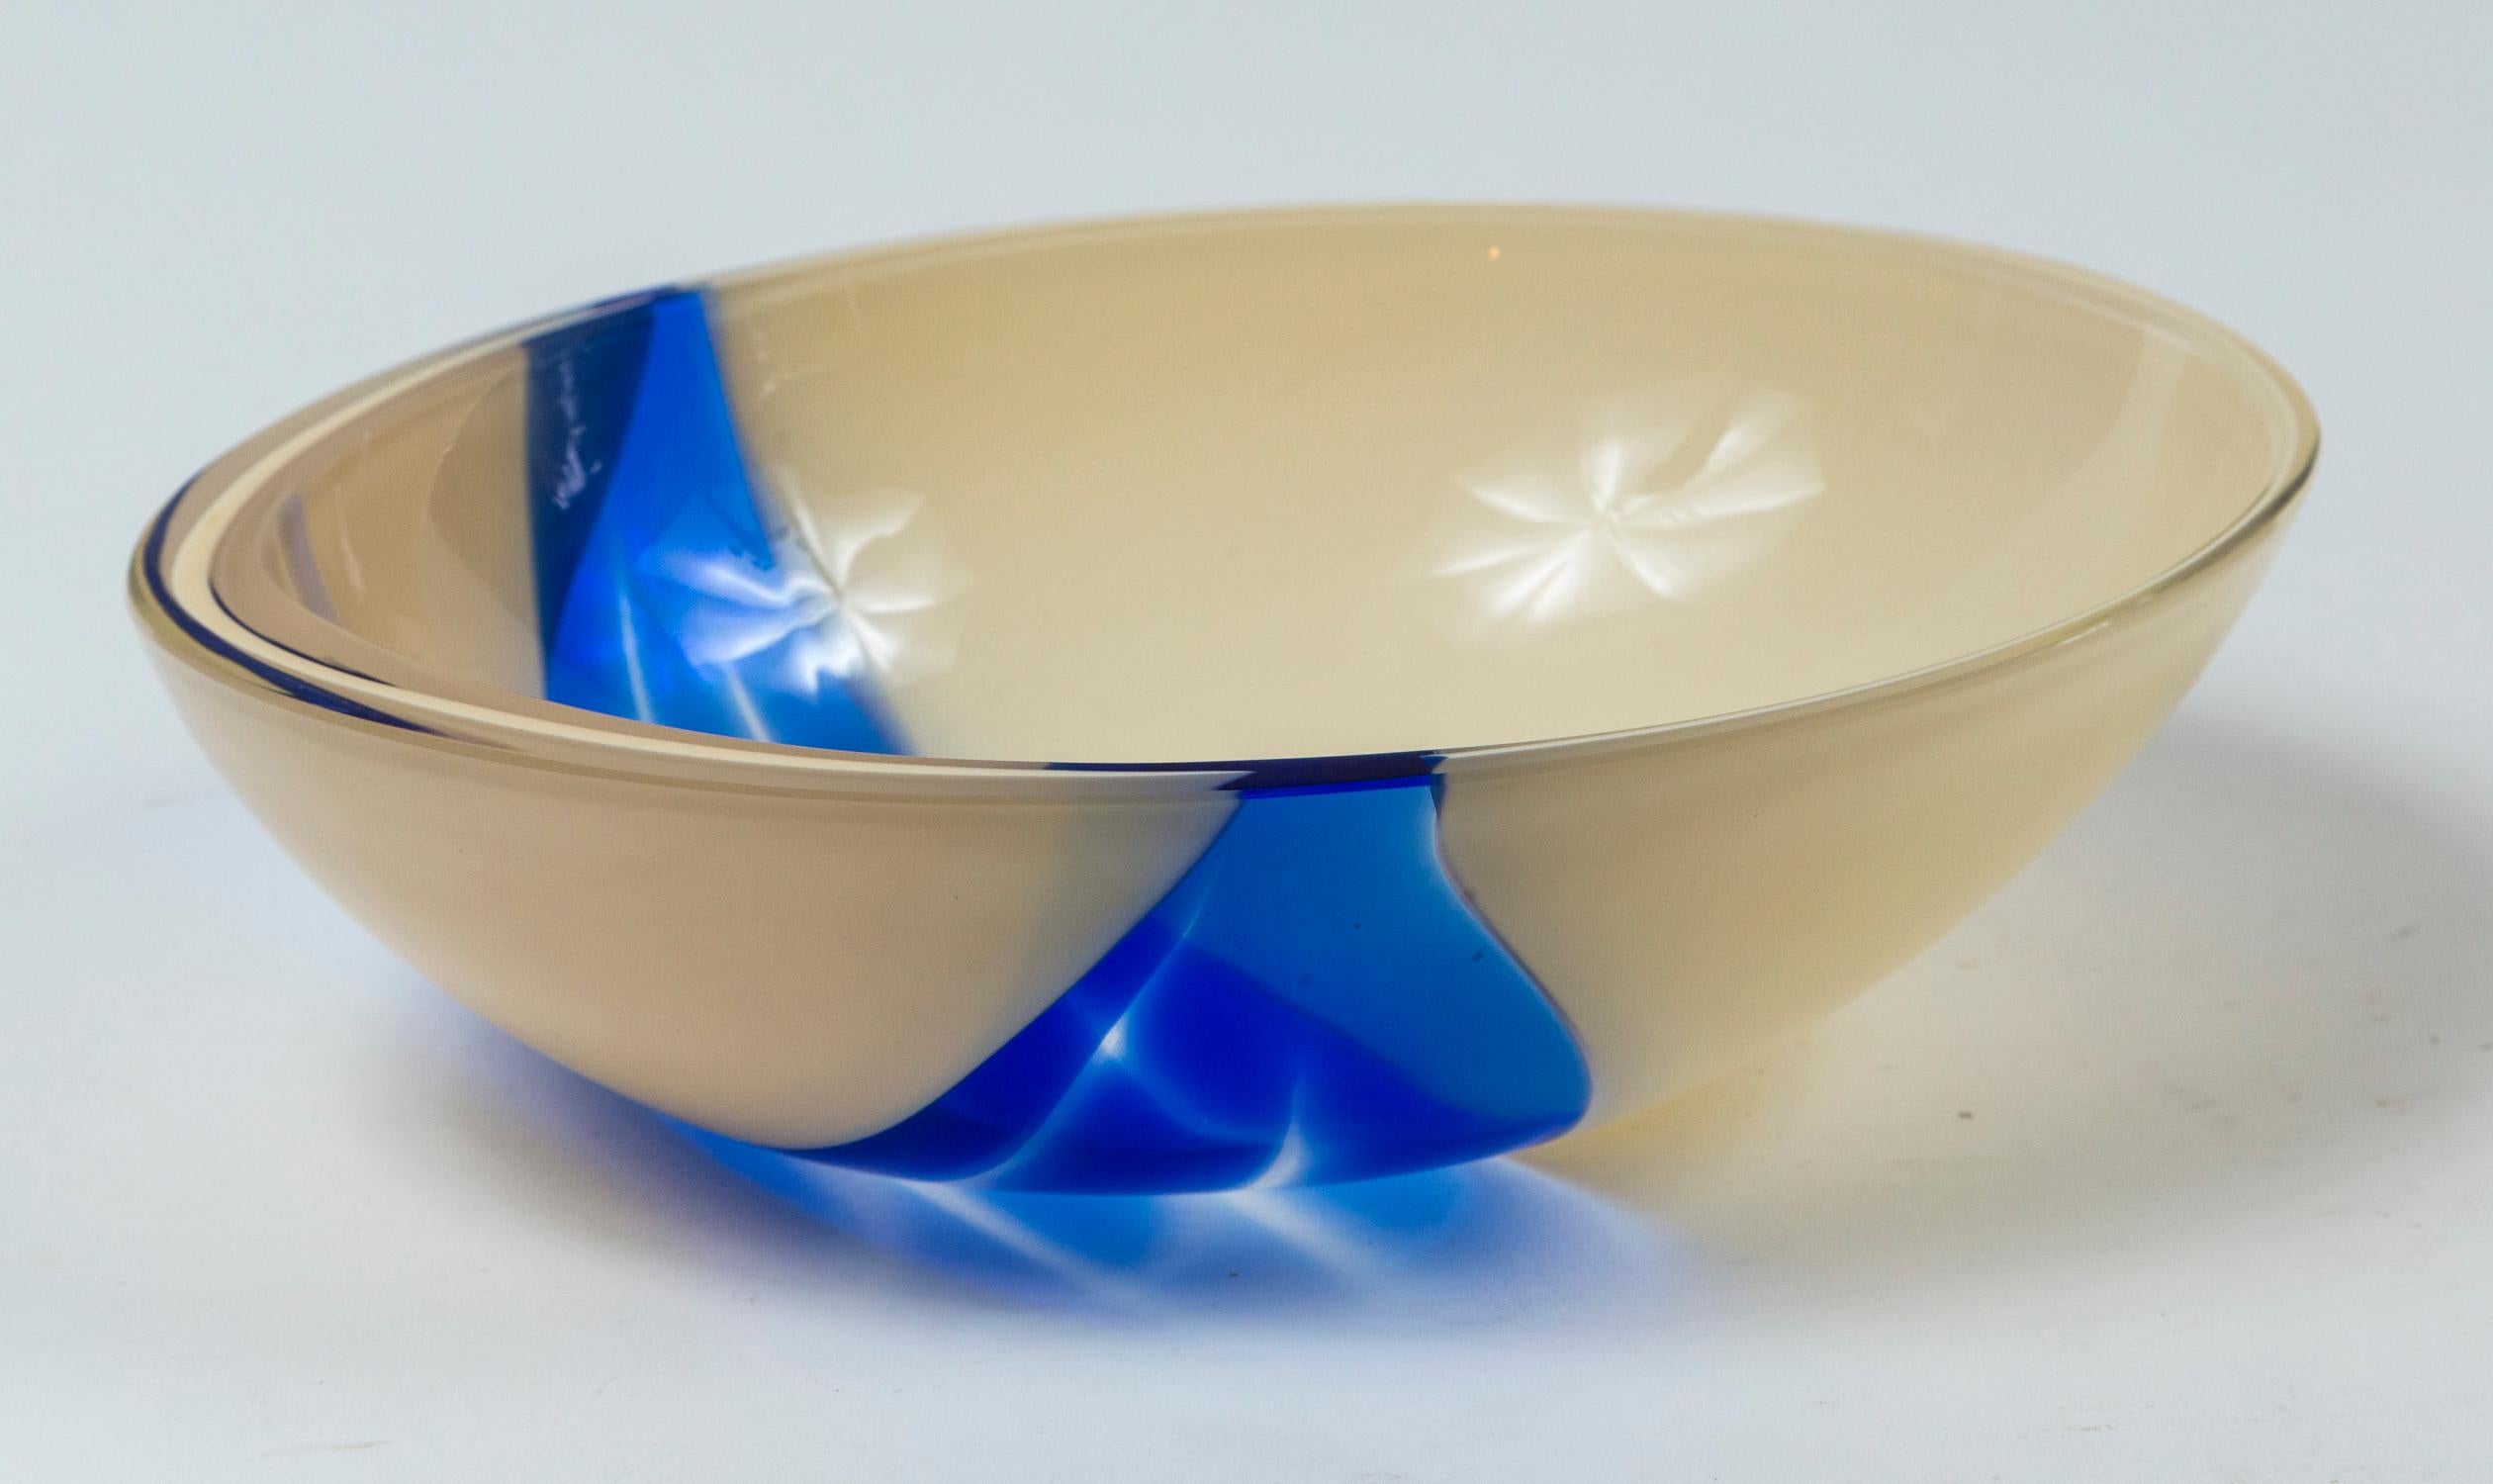 Vintage Livio Seguso Sculptural Glass Bowl, Murano, Italy, circa 1970. A teardrop shape bowl of creamy-white opaque and clear cobalt blue hand-blown glass.